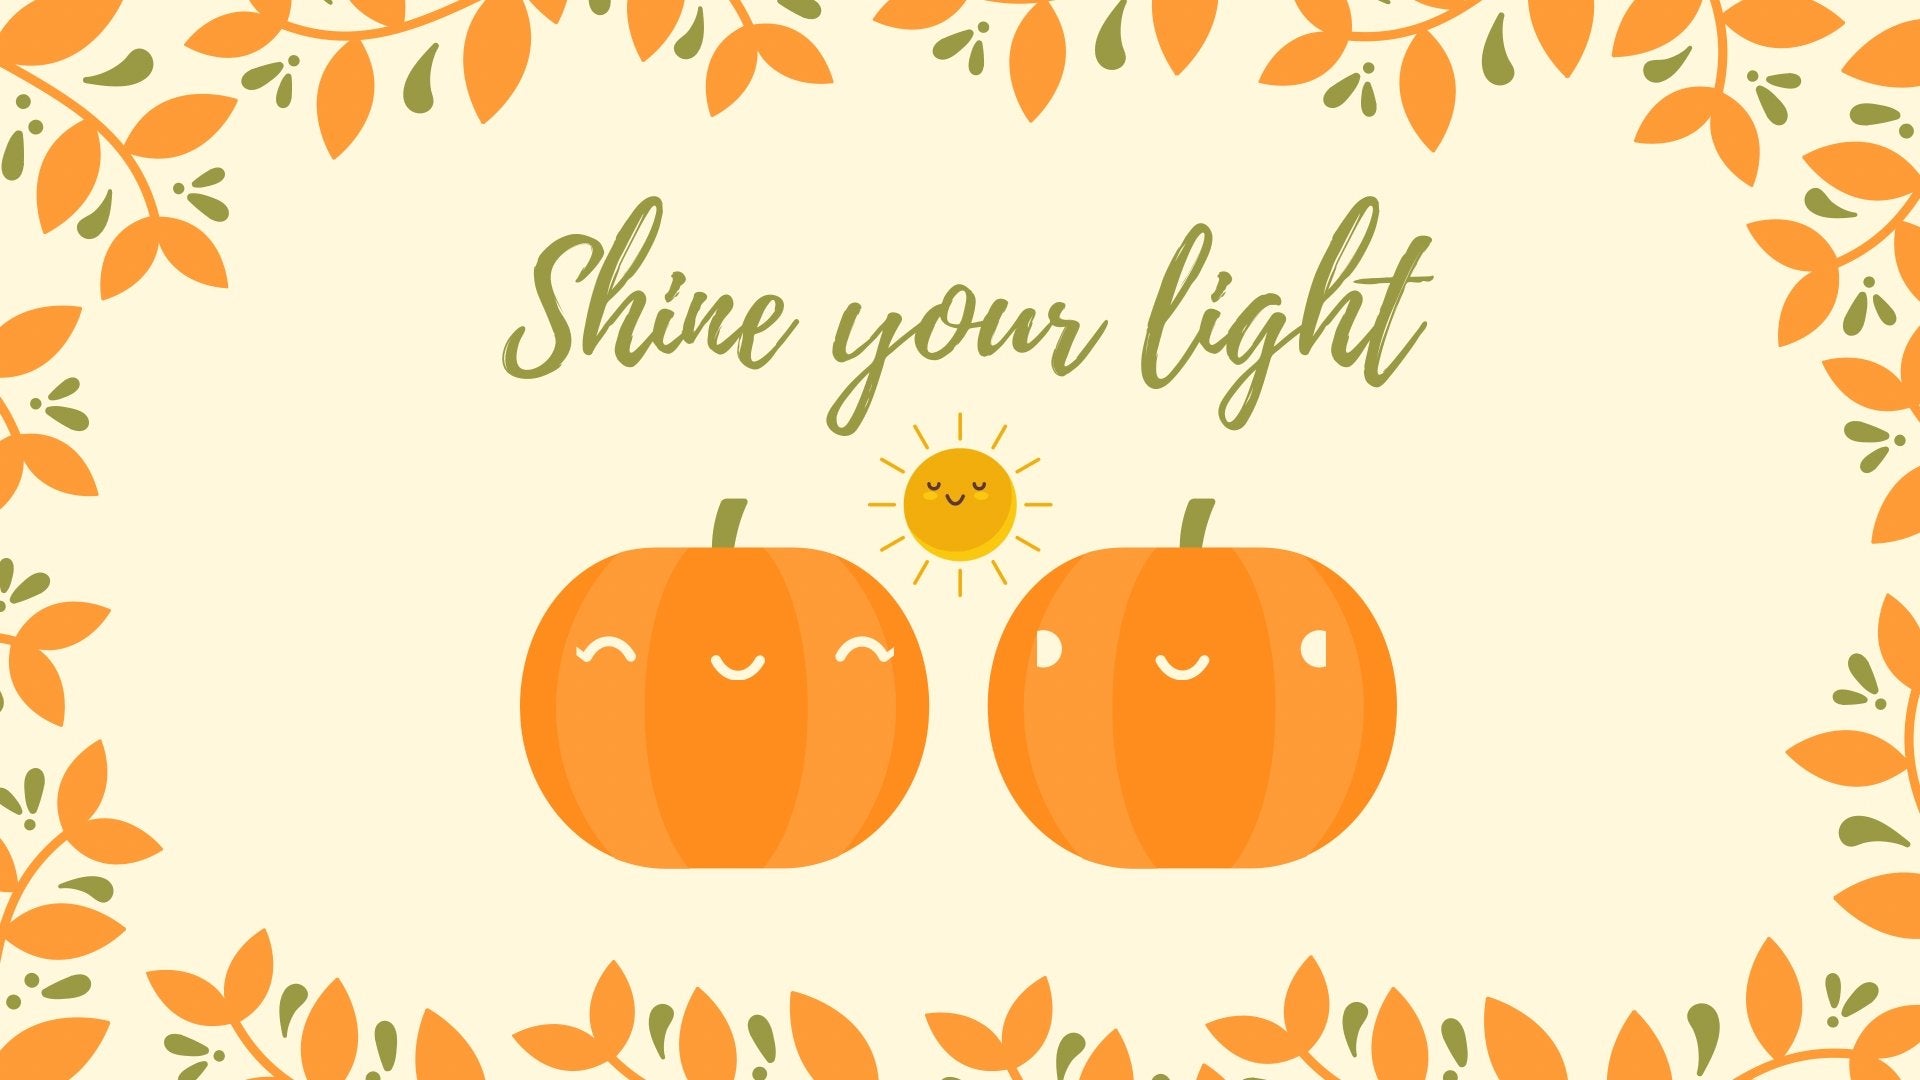 Shine your light desktop wallpapers - Bee The Light